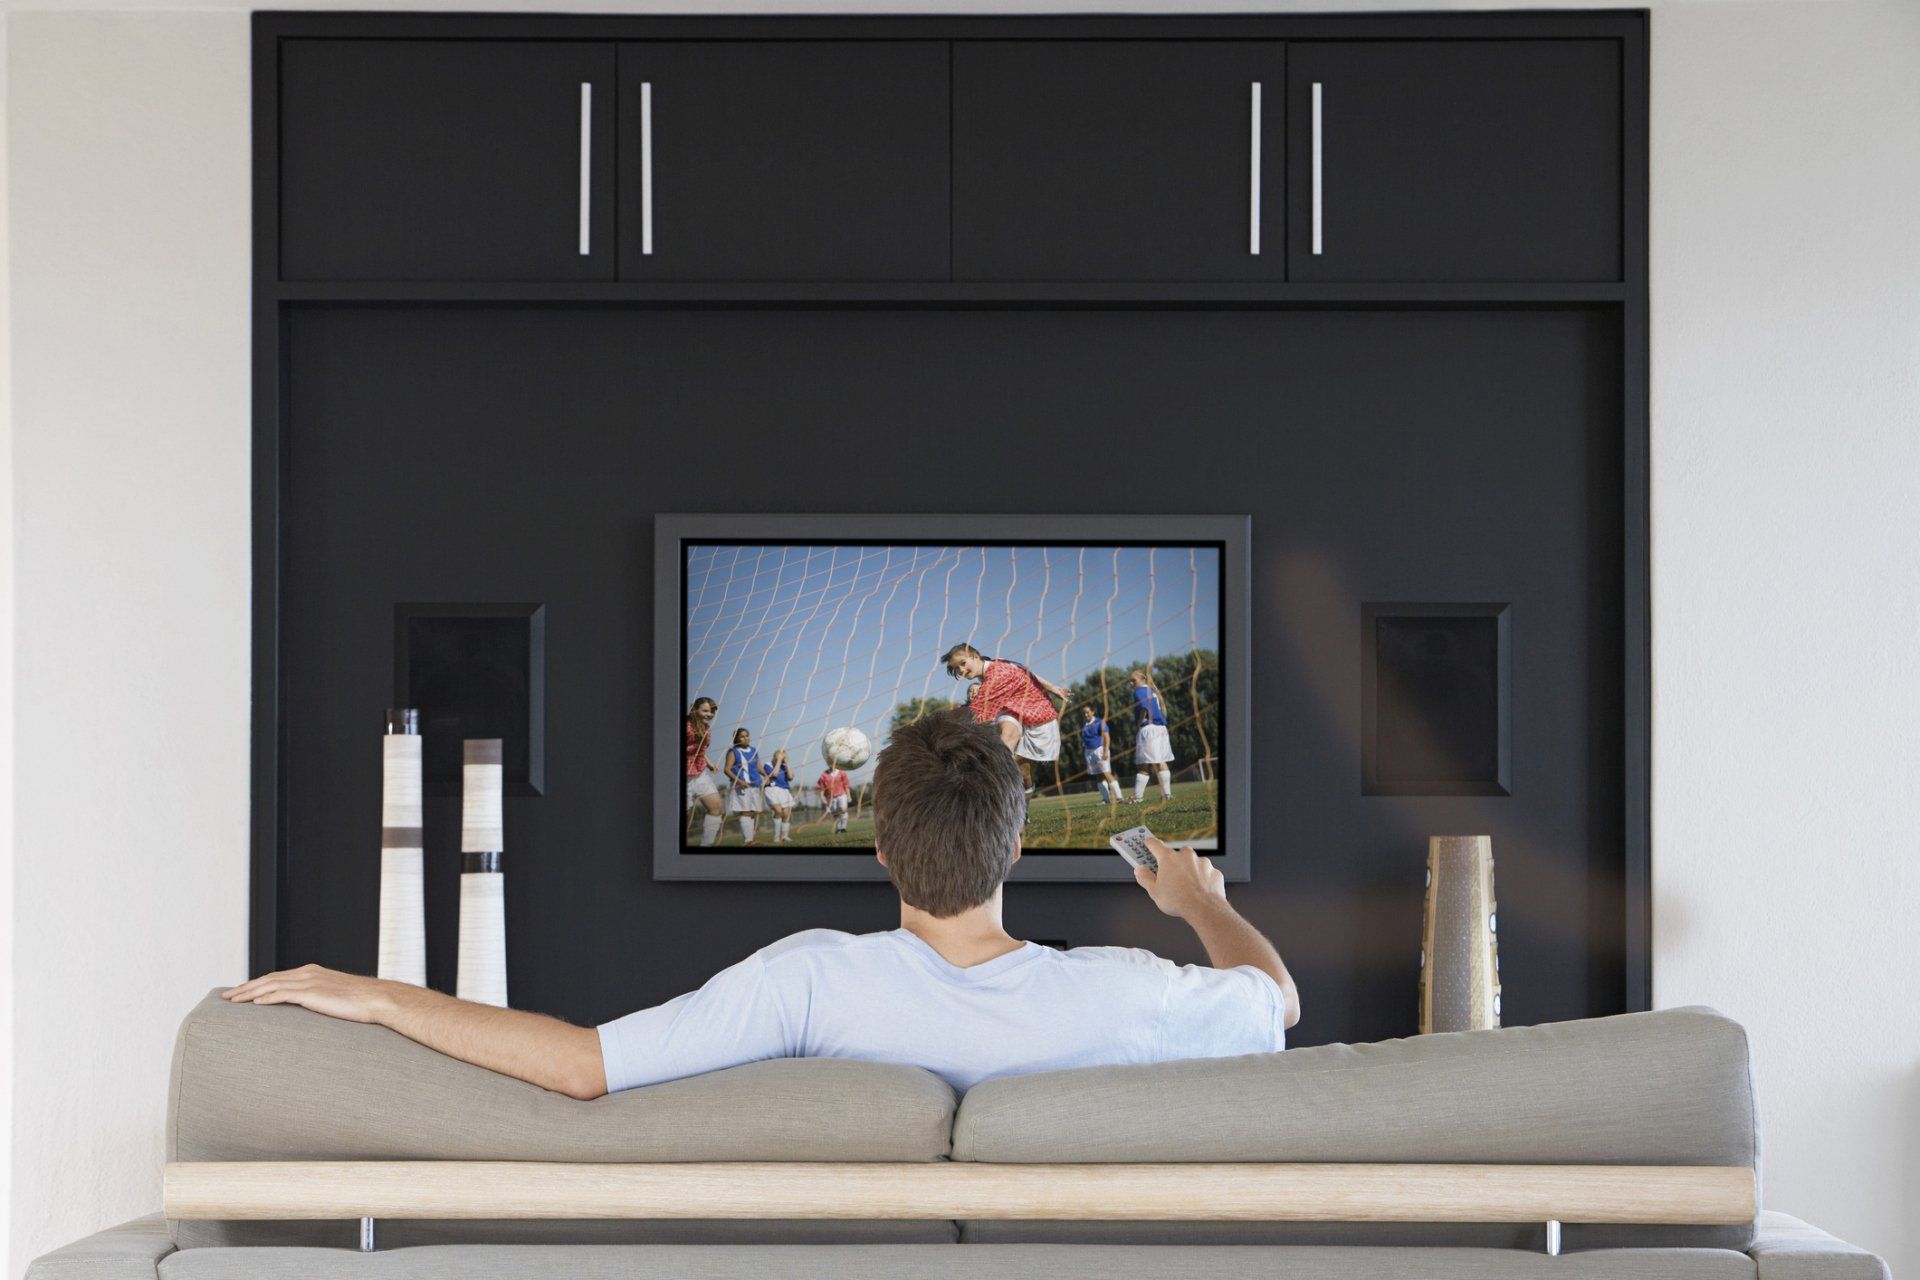 Watching Football on TV — Harrington Park, NSW — Riteway Antenna